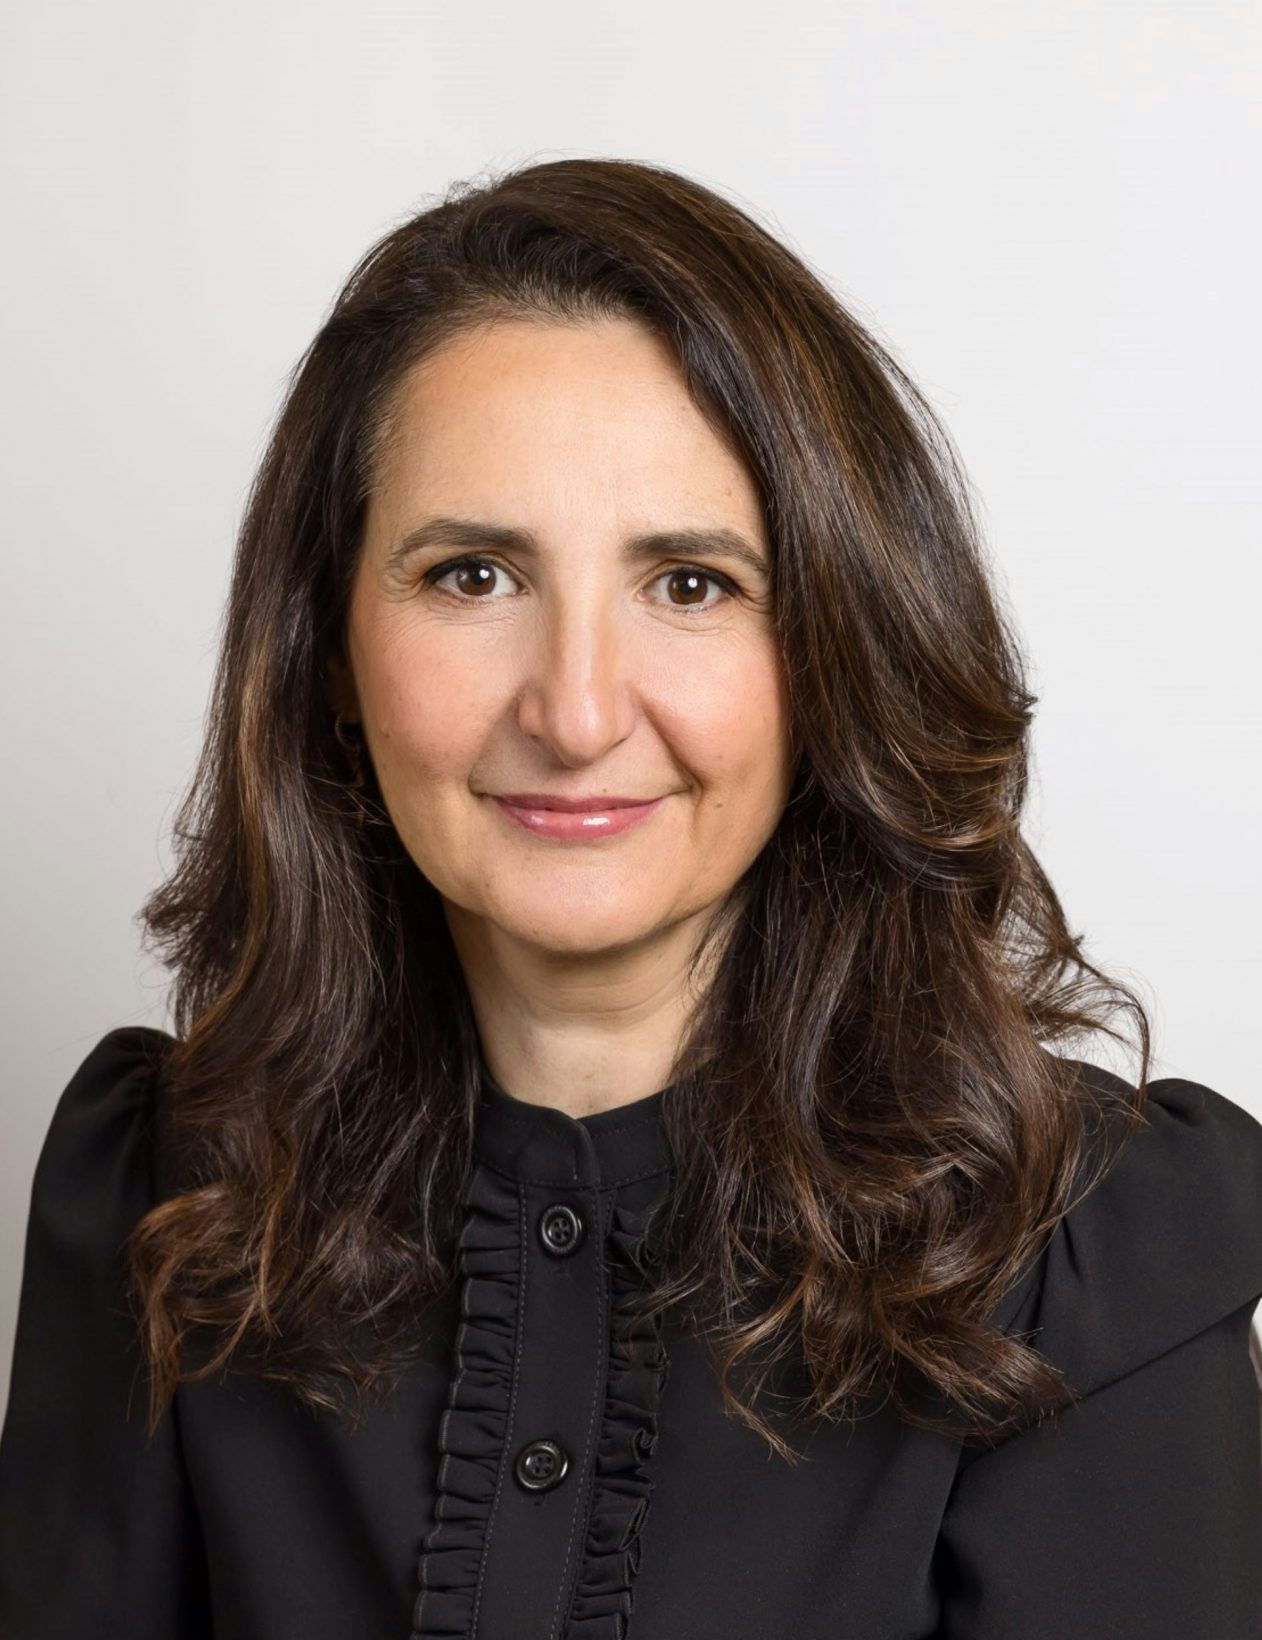 Ilaria Resta to succeed François-Henry Bennahmias as CEO of Audemars Piguet